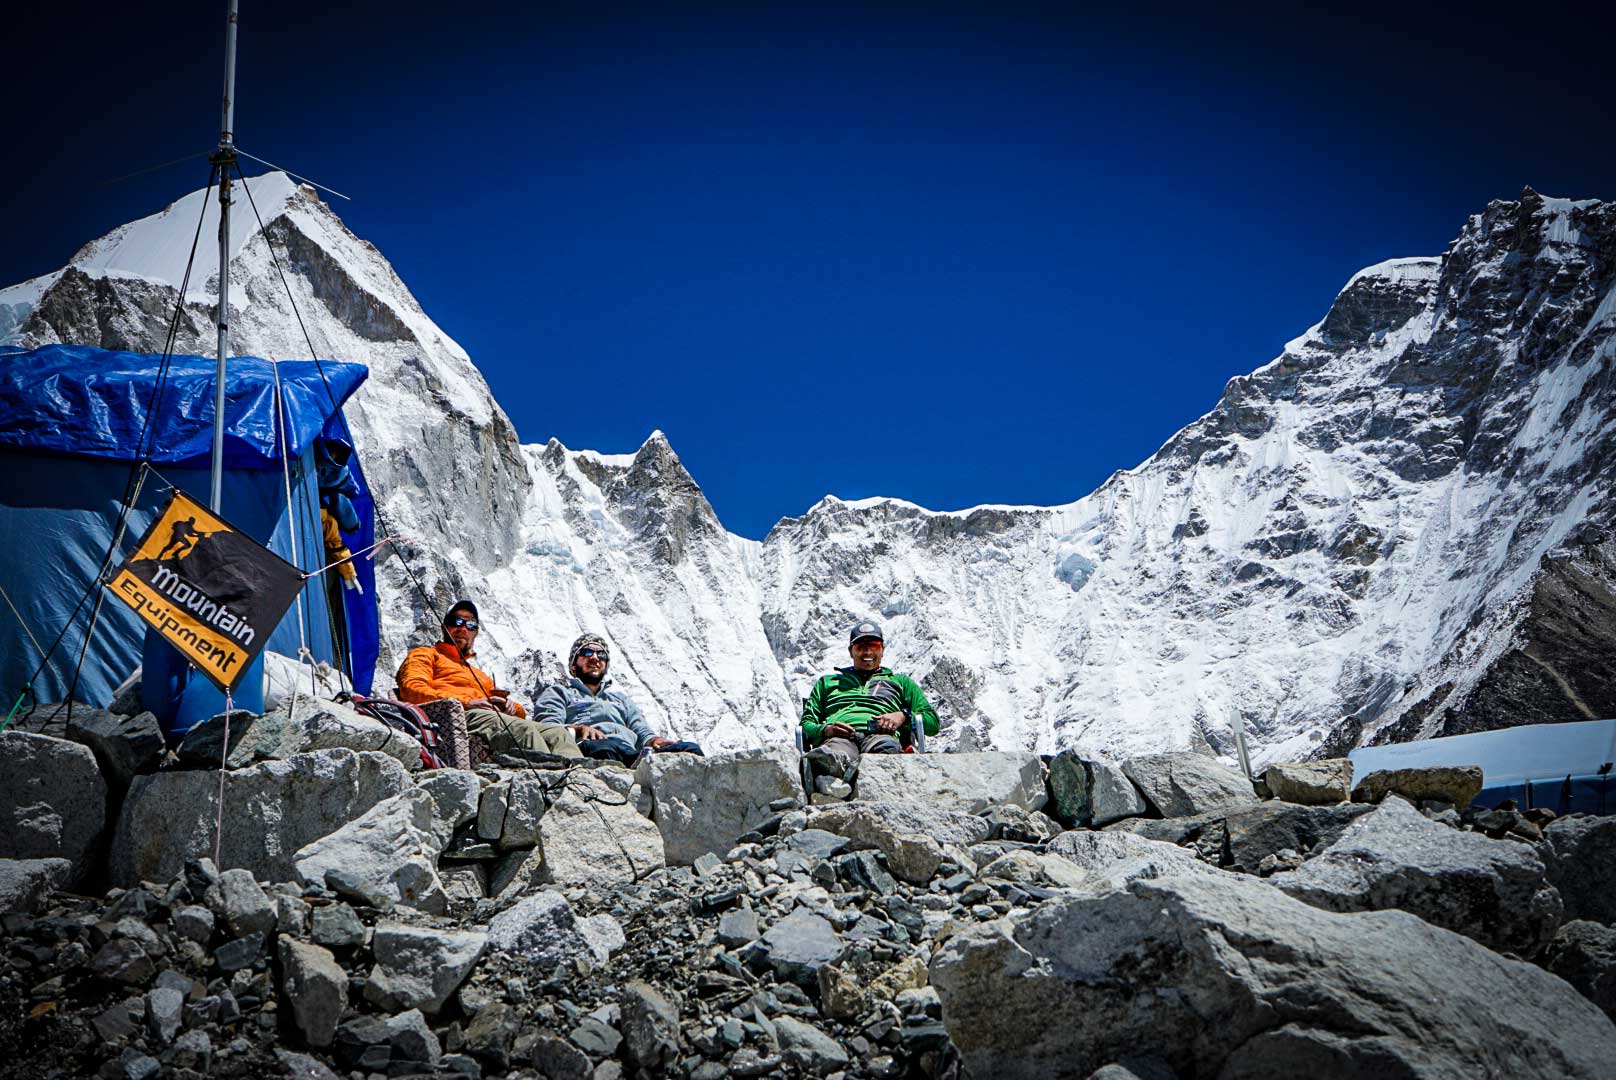 Resting up in Everest Base Camp, 2018